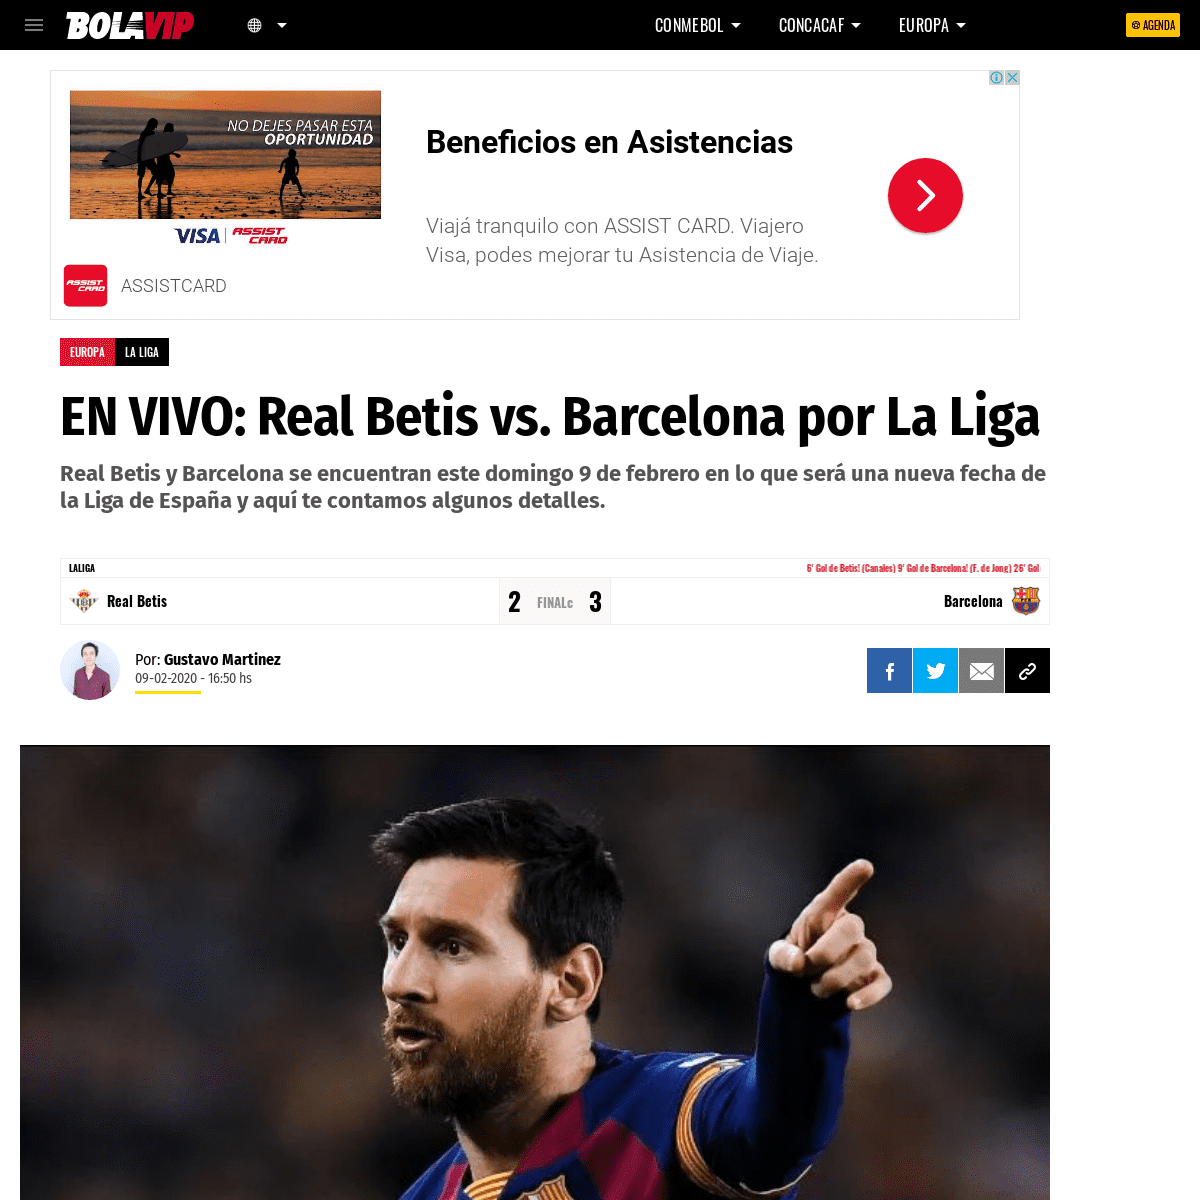 A complete backup of bolavip.com/europa/EN-VIVO-Real-Betis-vs.-Barcelona-por-La-Liga-F22-20200208-0132.html